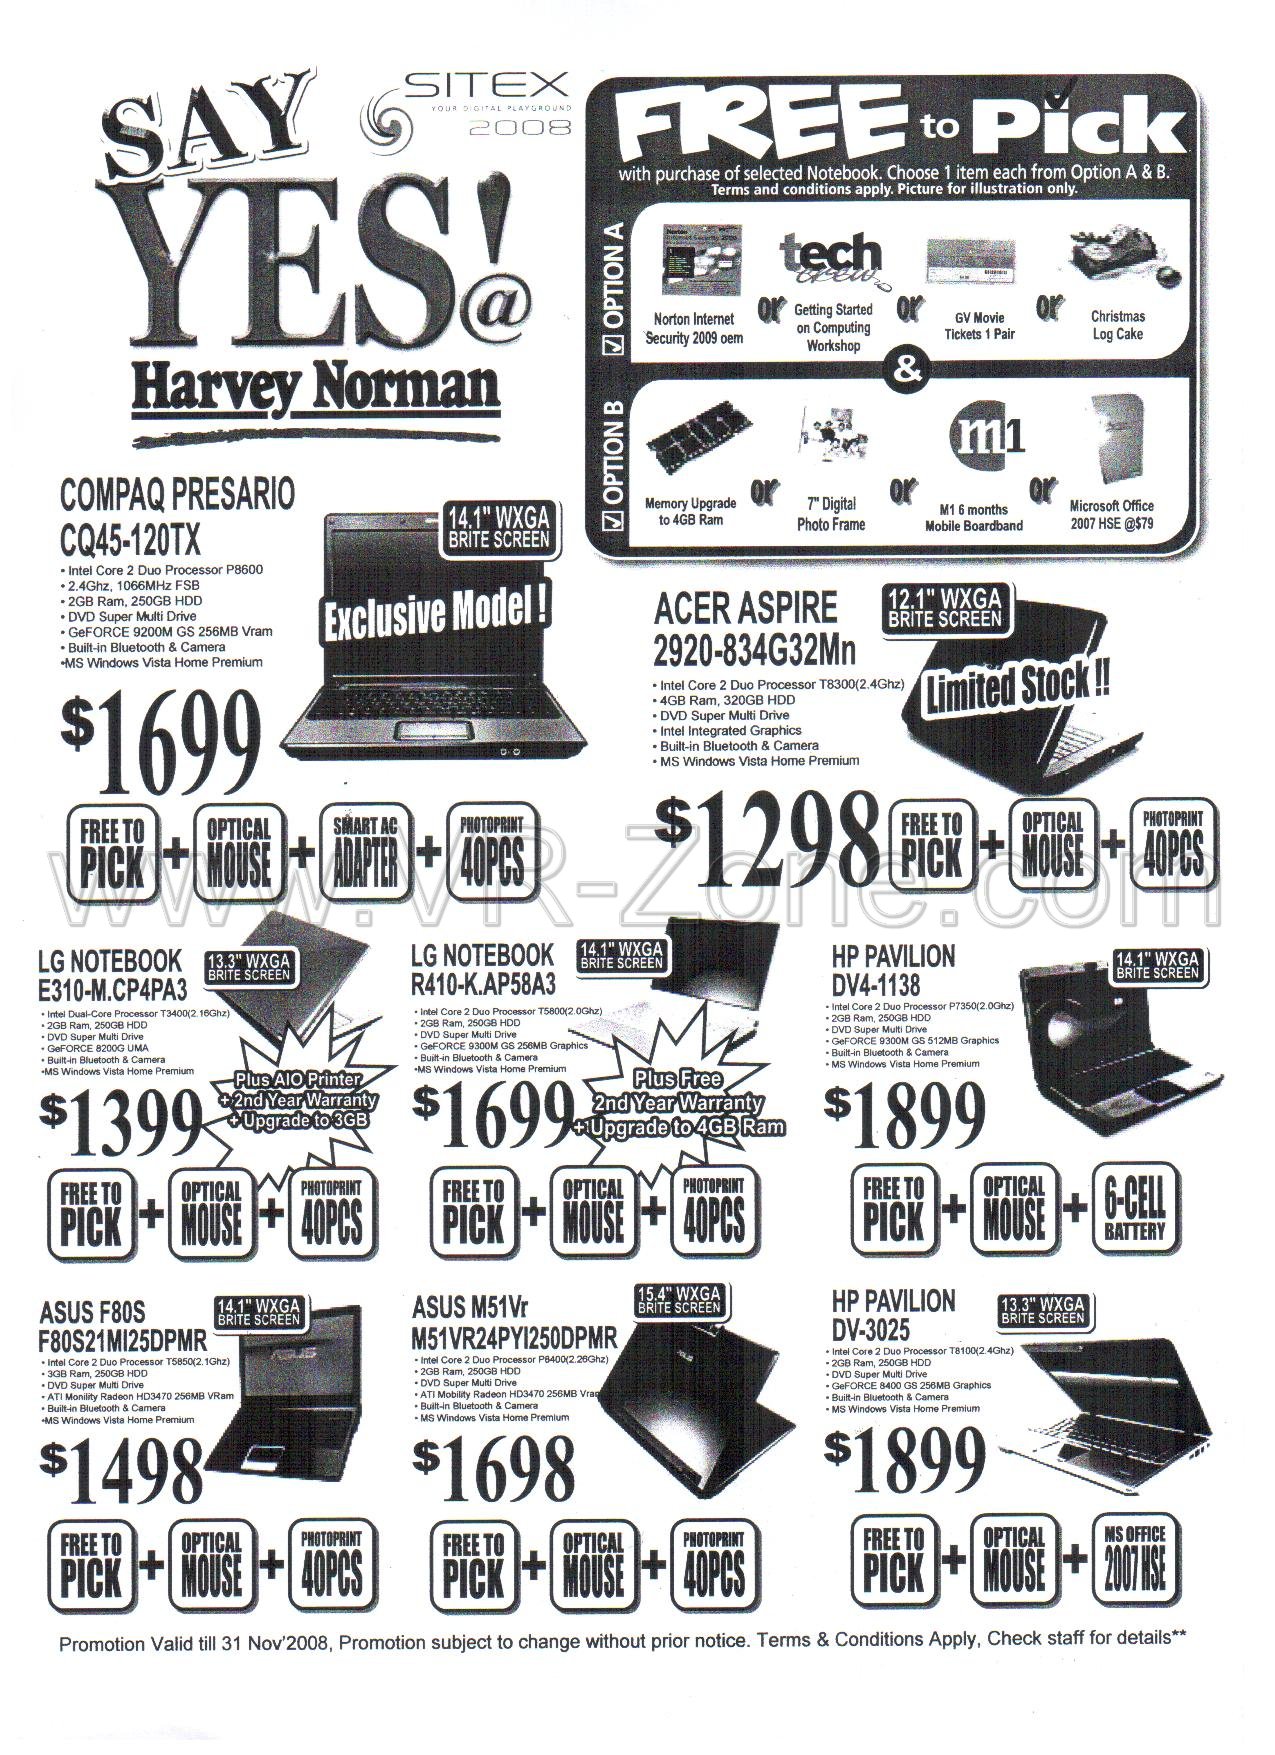 Sitex 2008 price list image brochure of Harvey Norman Notebooks 